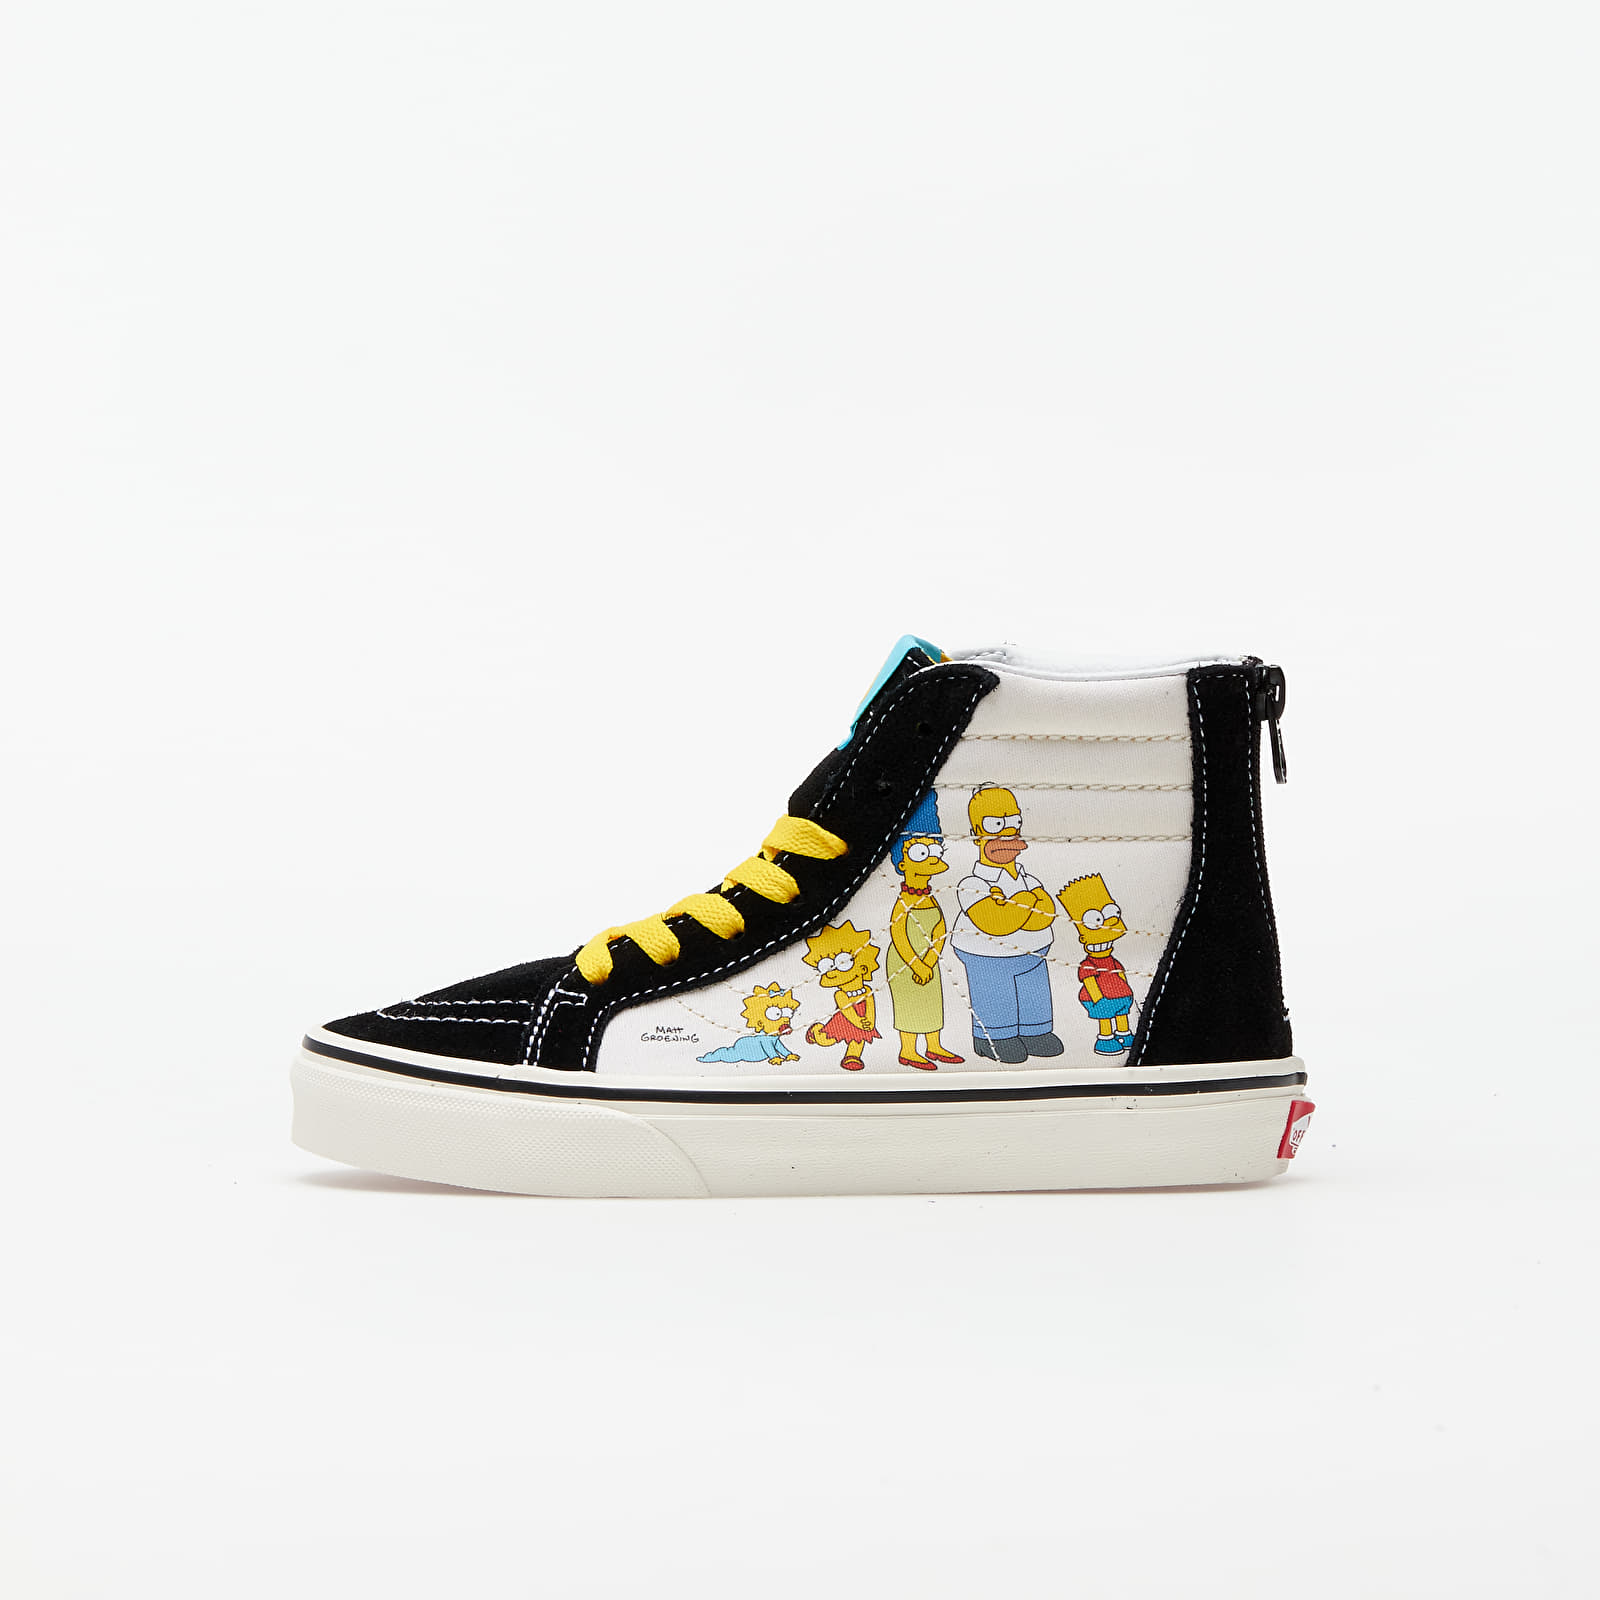 Kids' sneakers and shoes Vans Sk8-Hi Zip (The Simpsons) 1987-2020